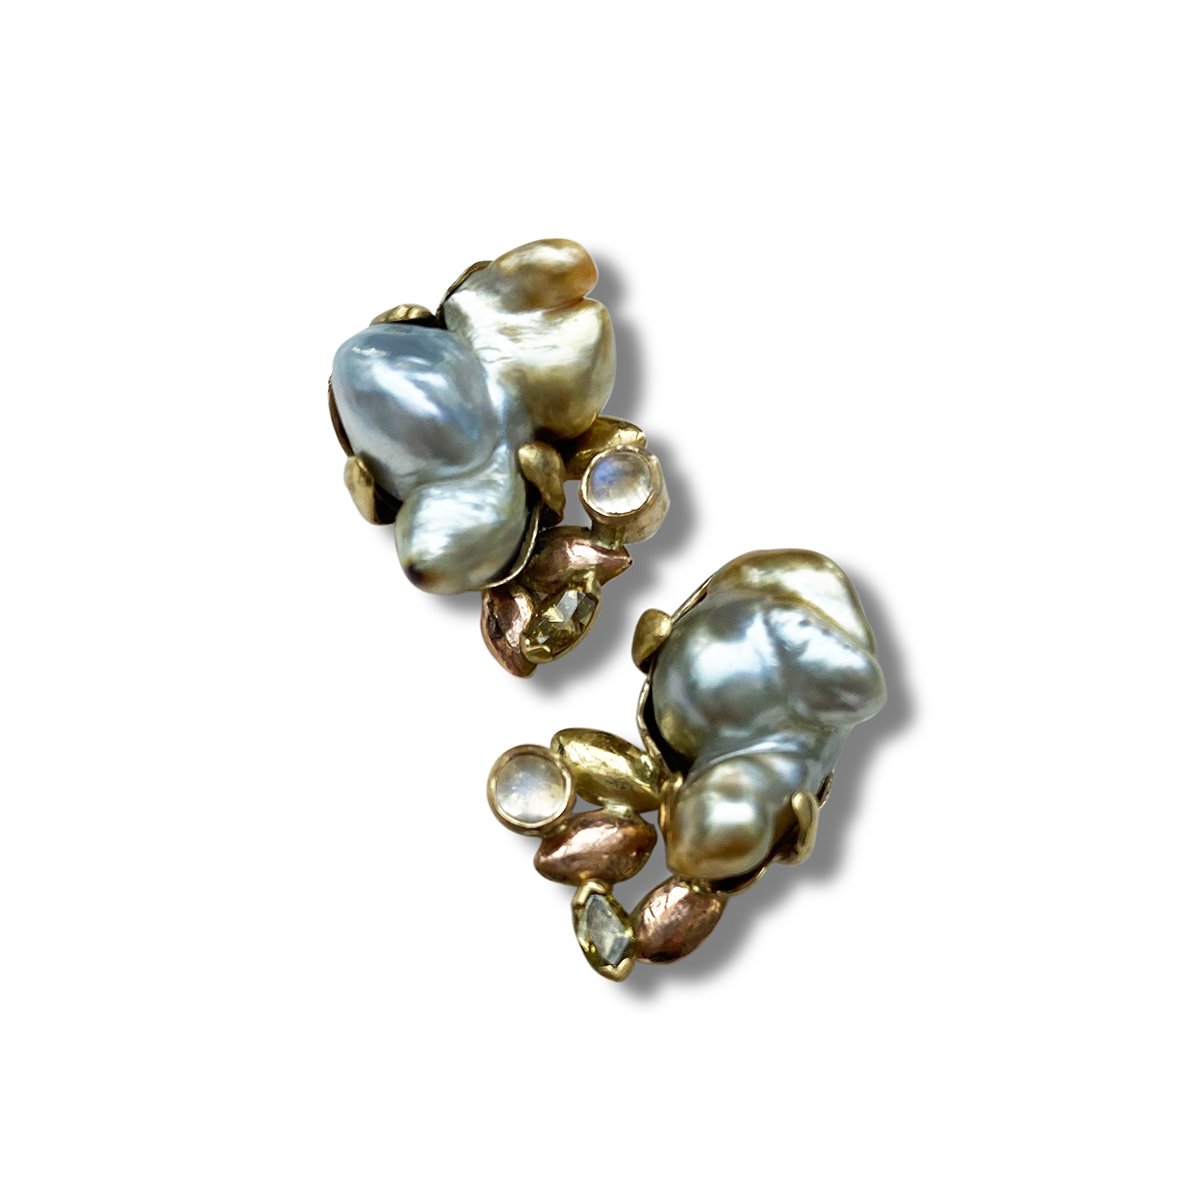 Acini gold earrings with keishi pearls diamonds and moonstones